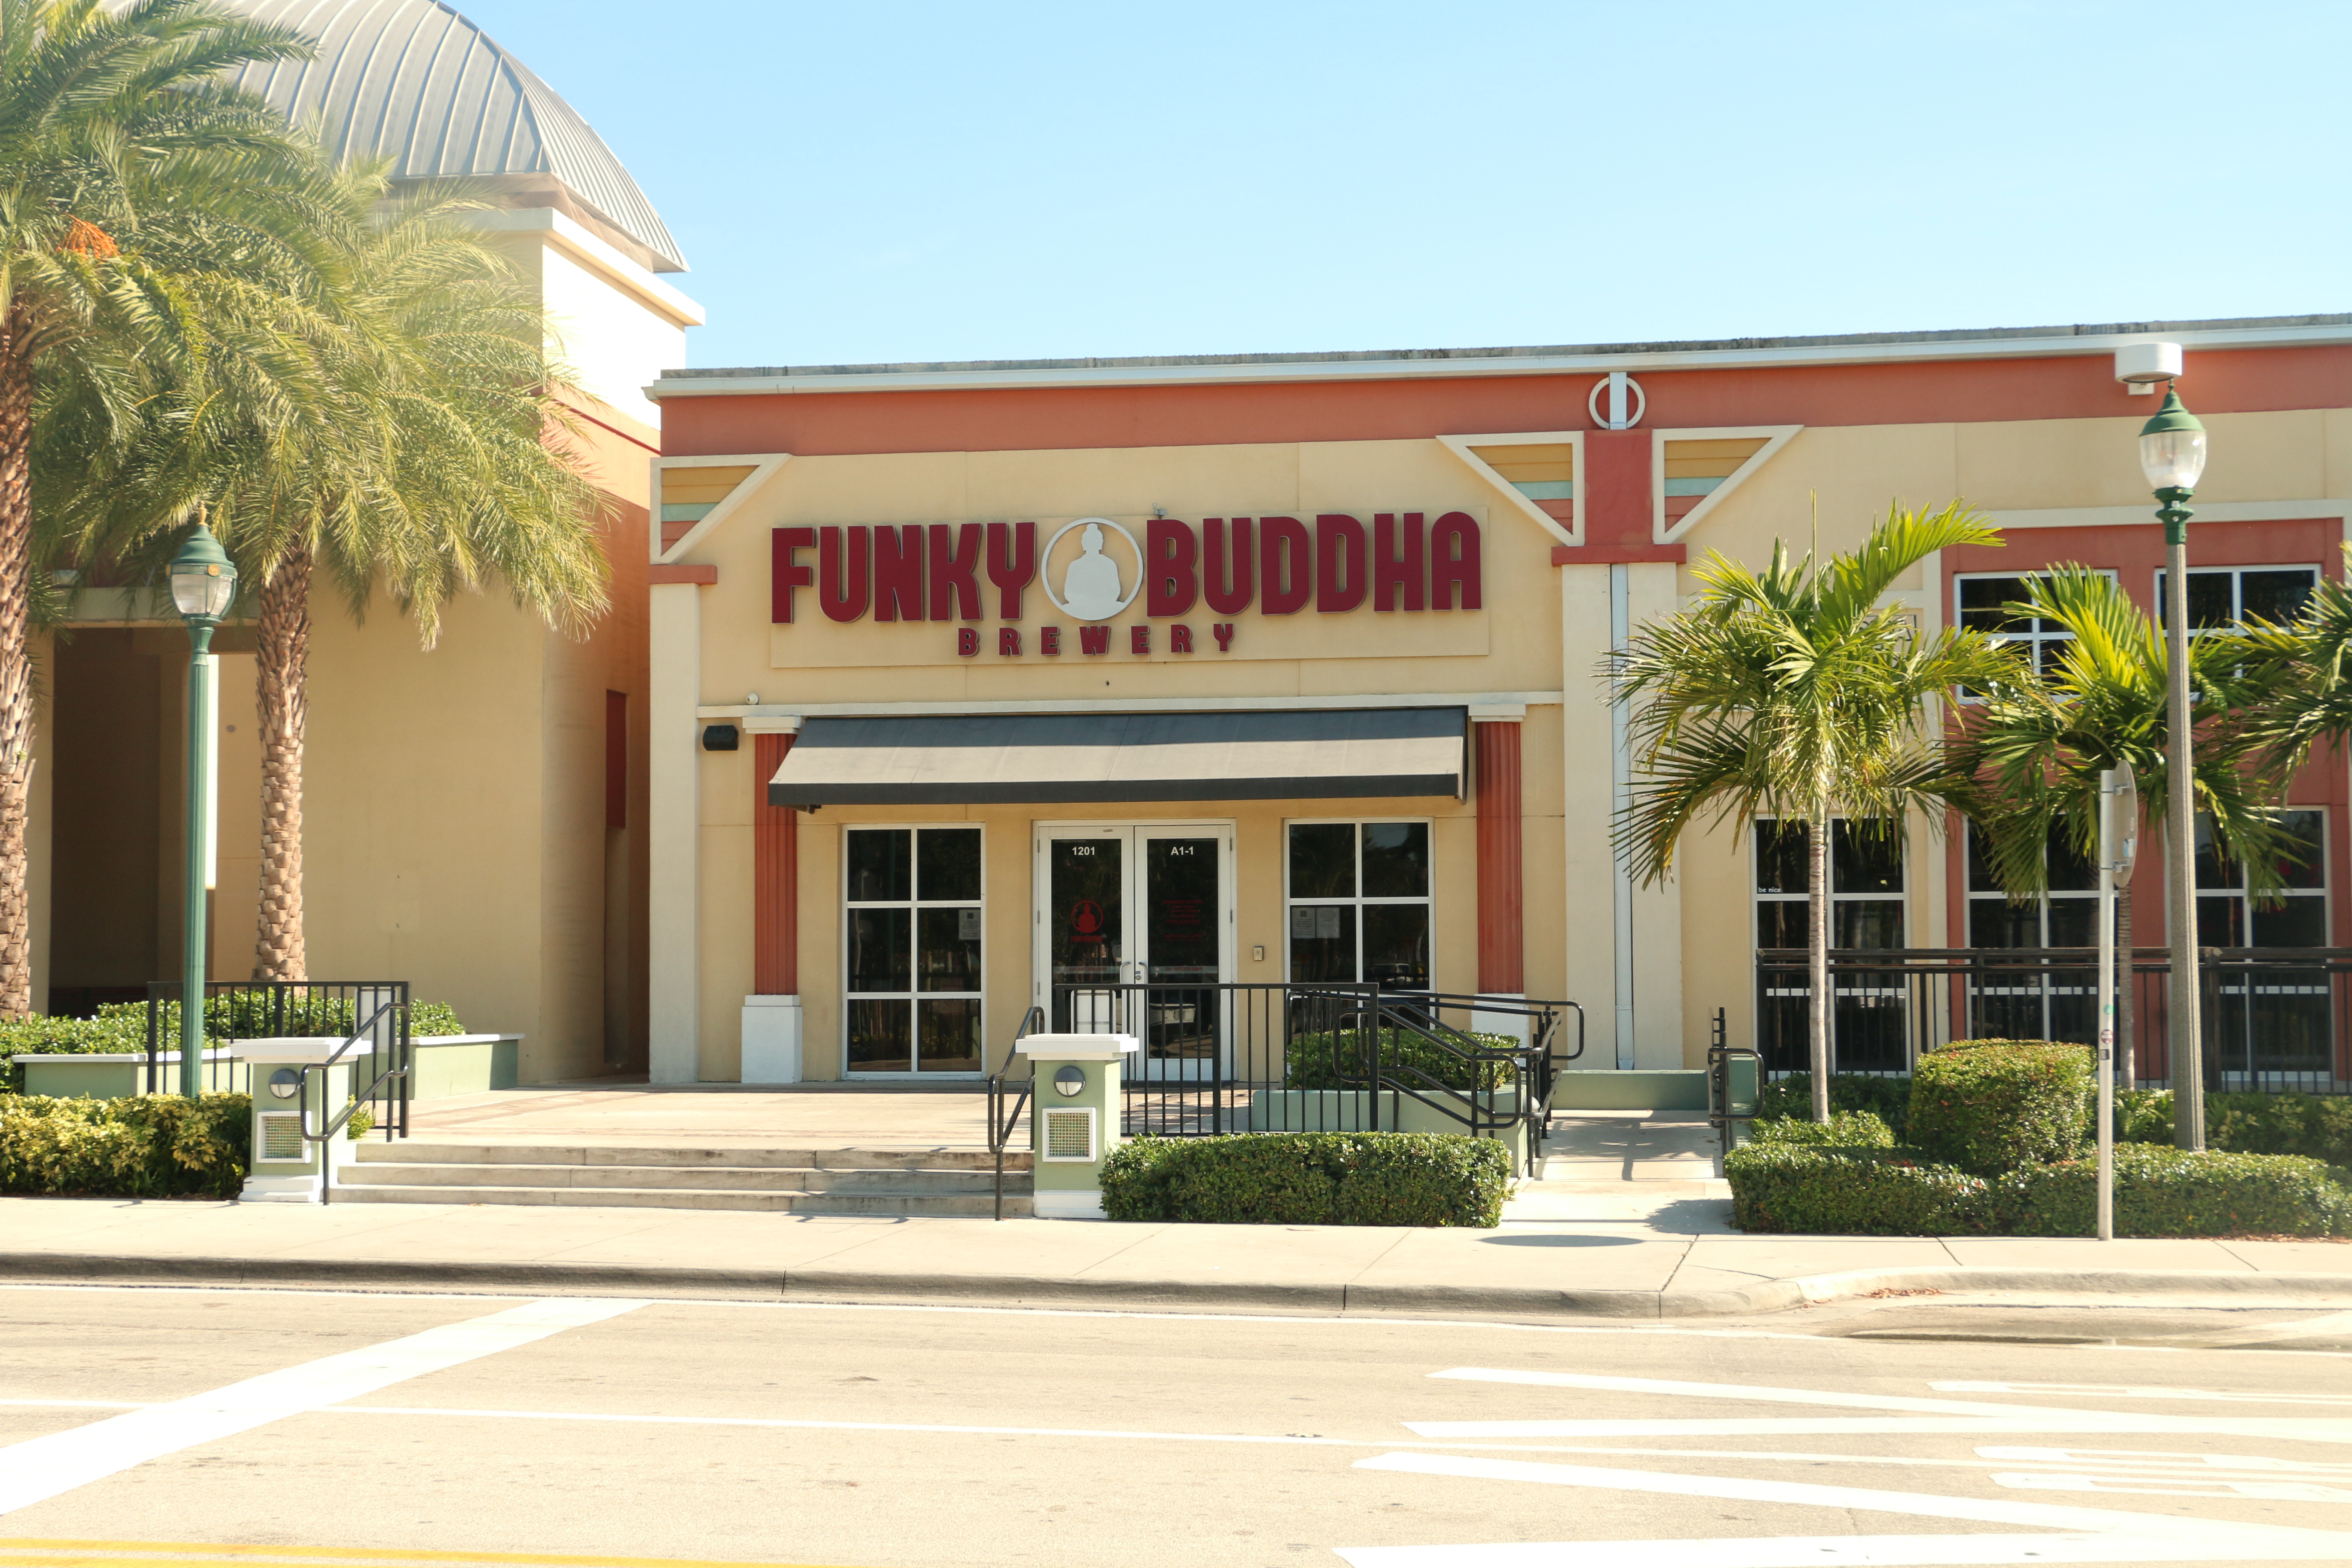 Funky Buddha Brewery Exterior